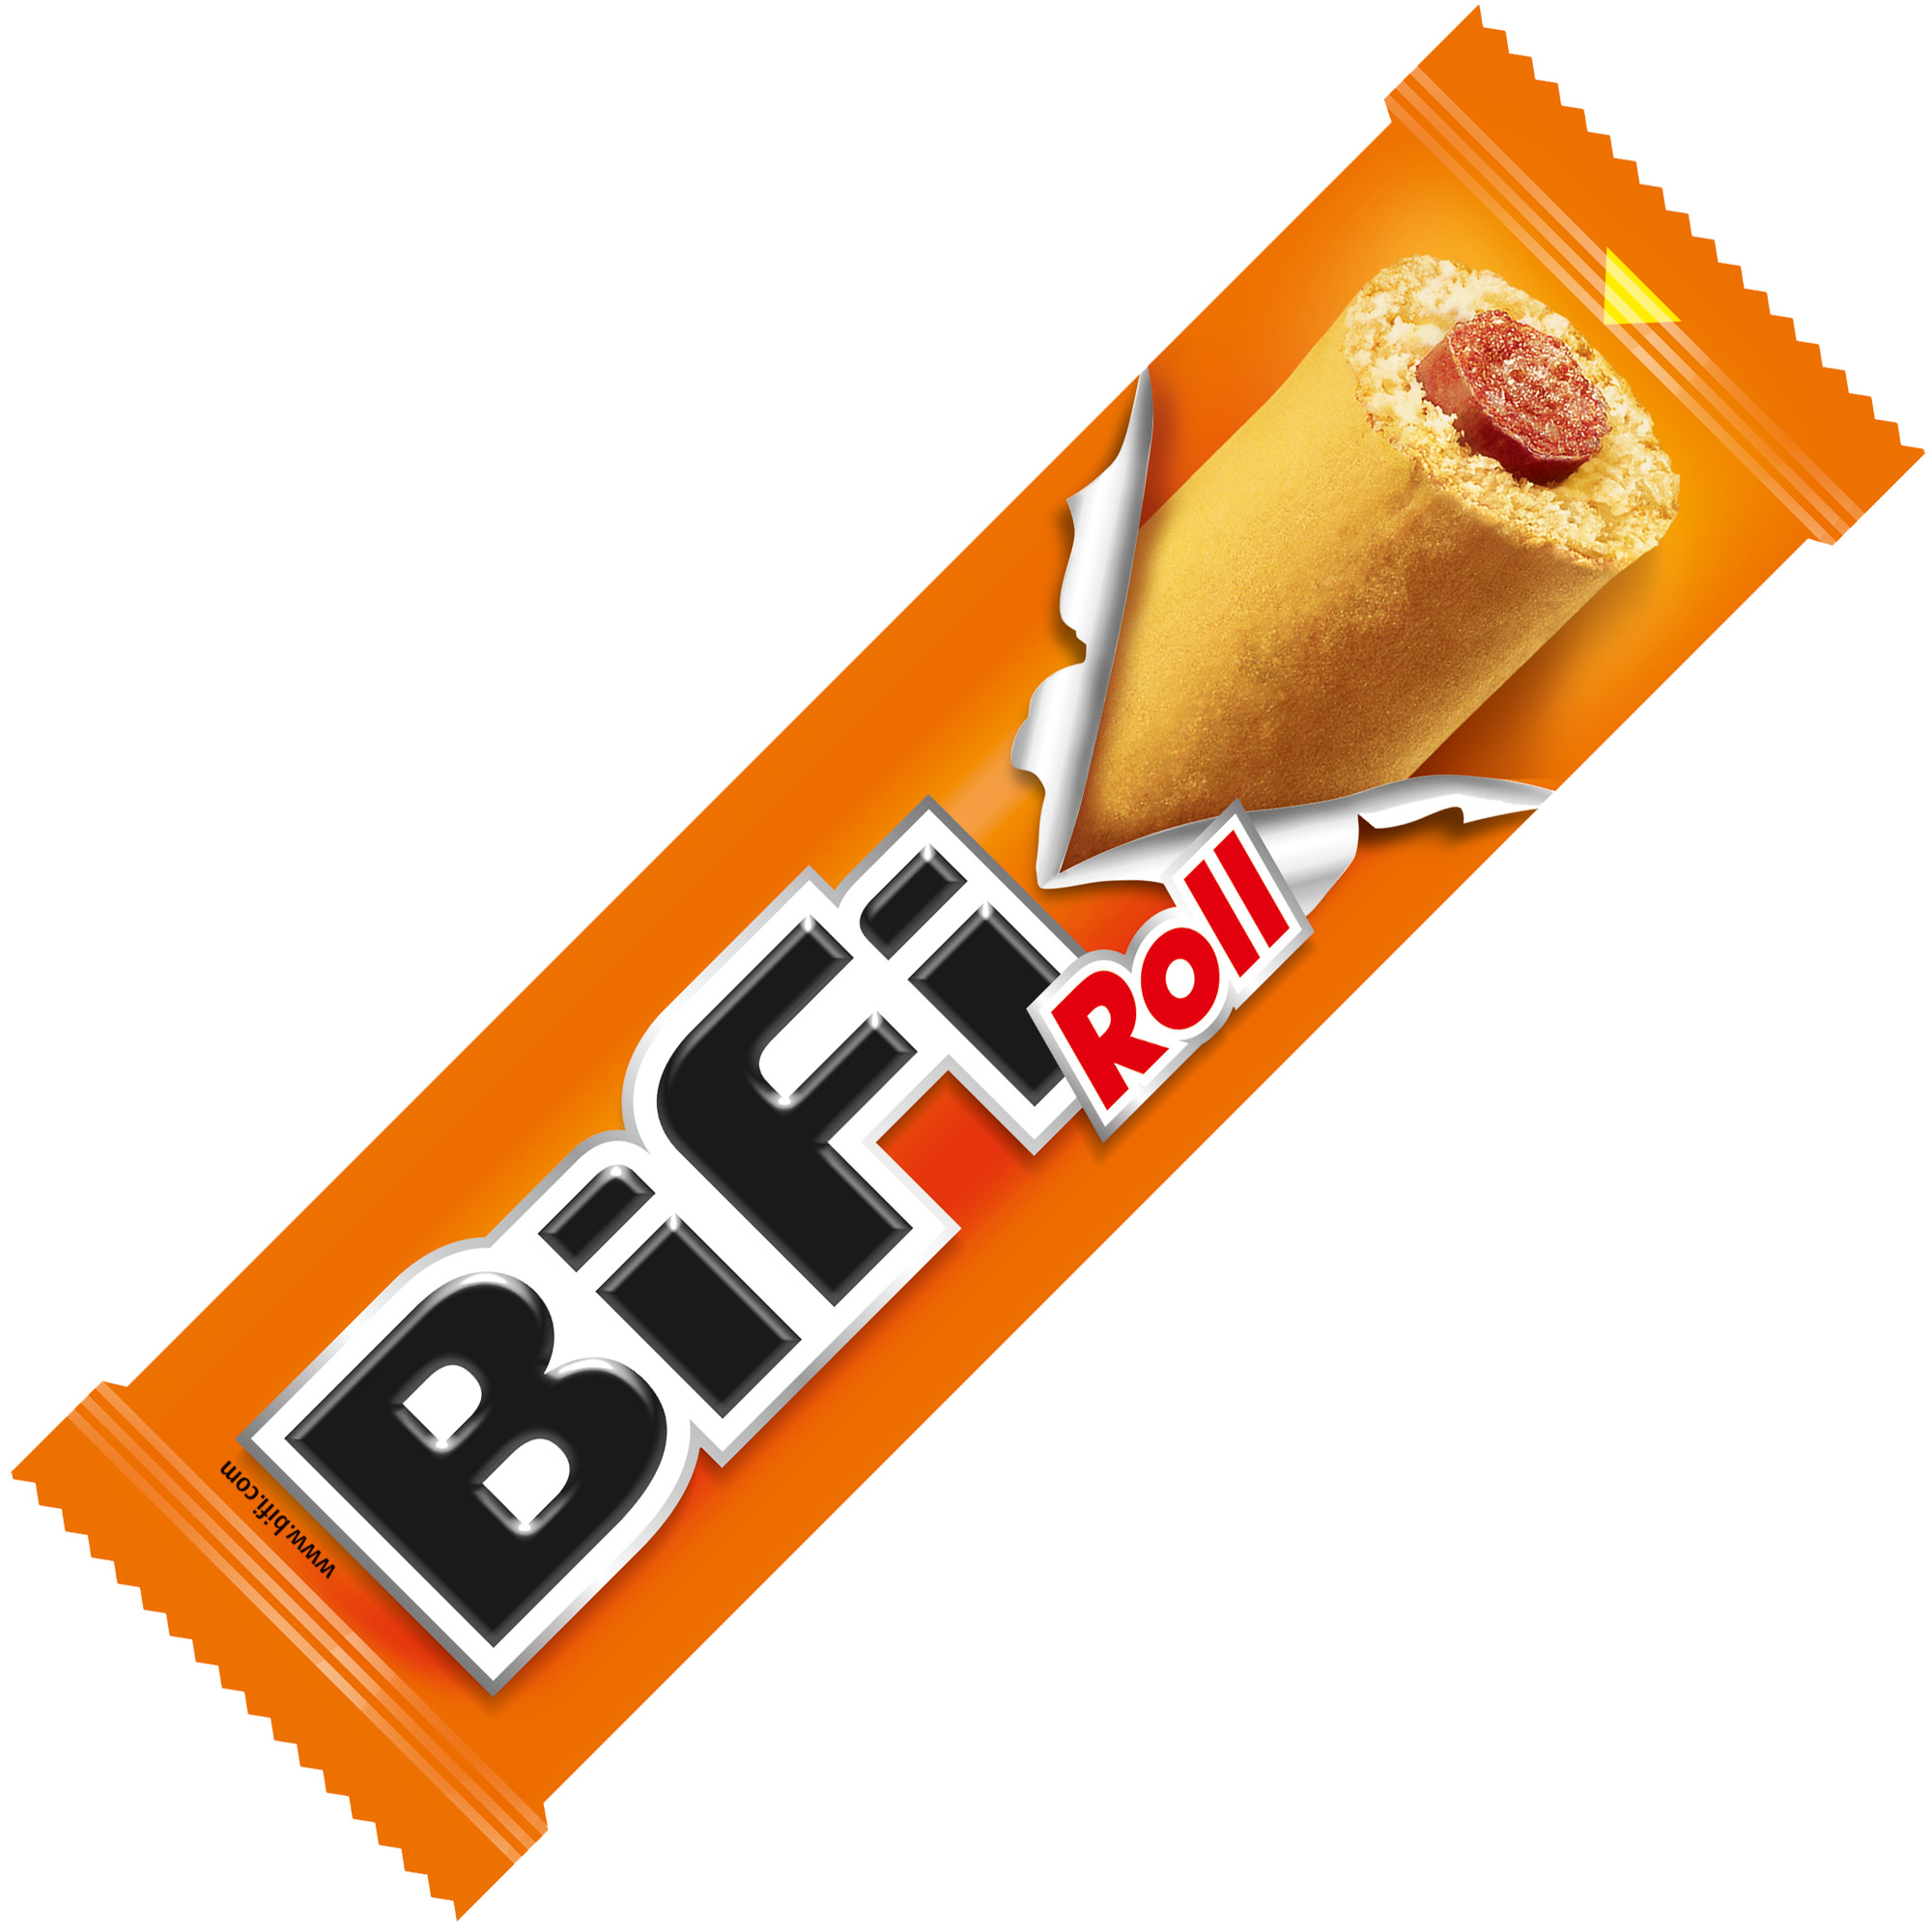 Bifi Roll